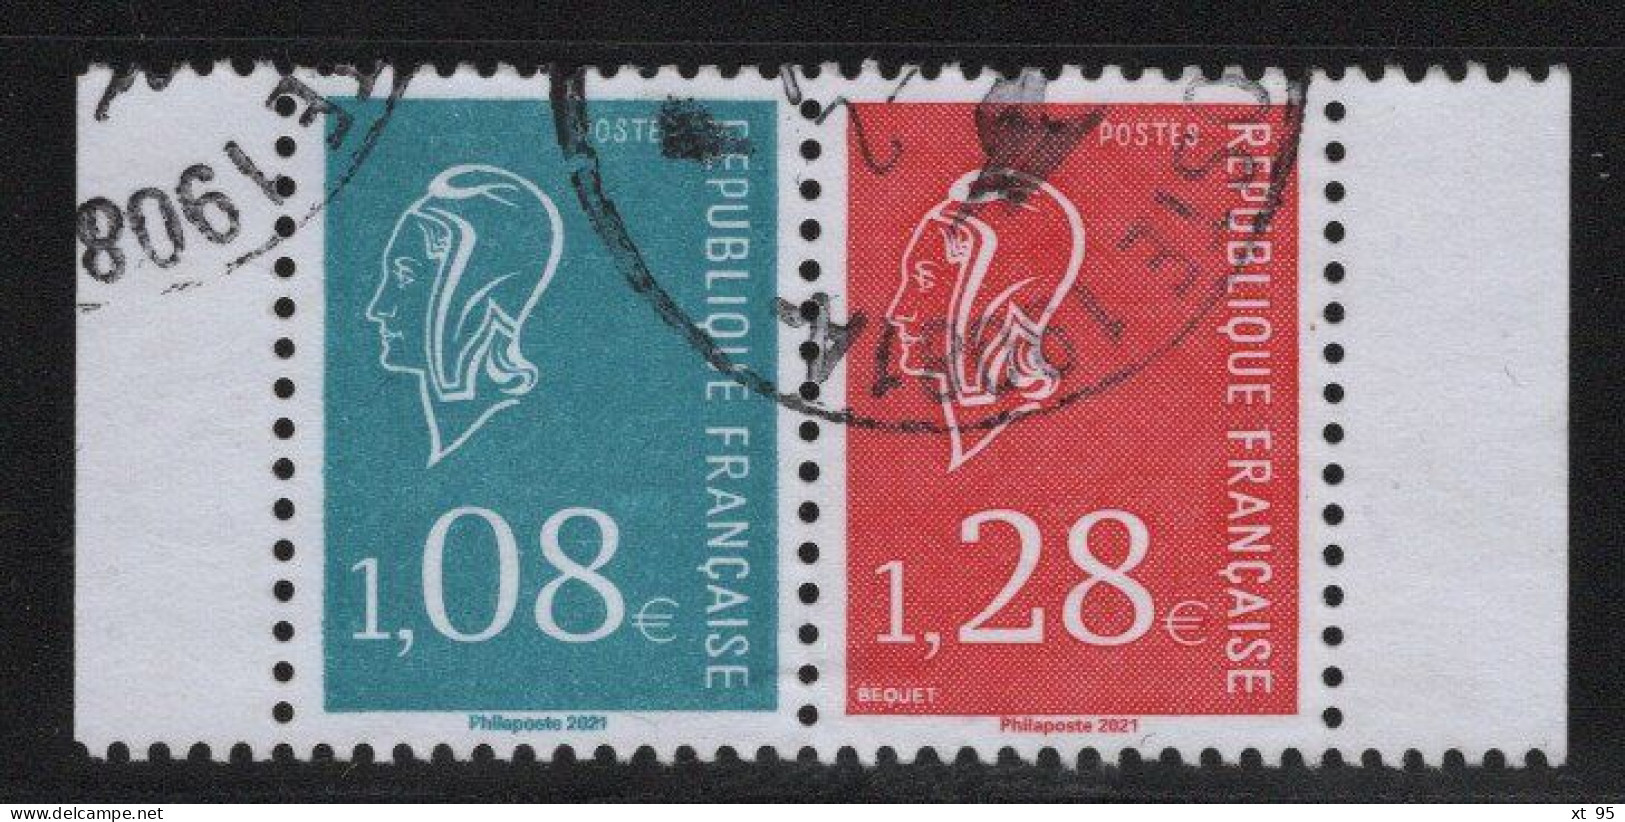 France - N°5535 + 5536 - Paire Du Carnet - Marianne De Bequet - Oblitere - Used Stamps